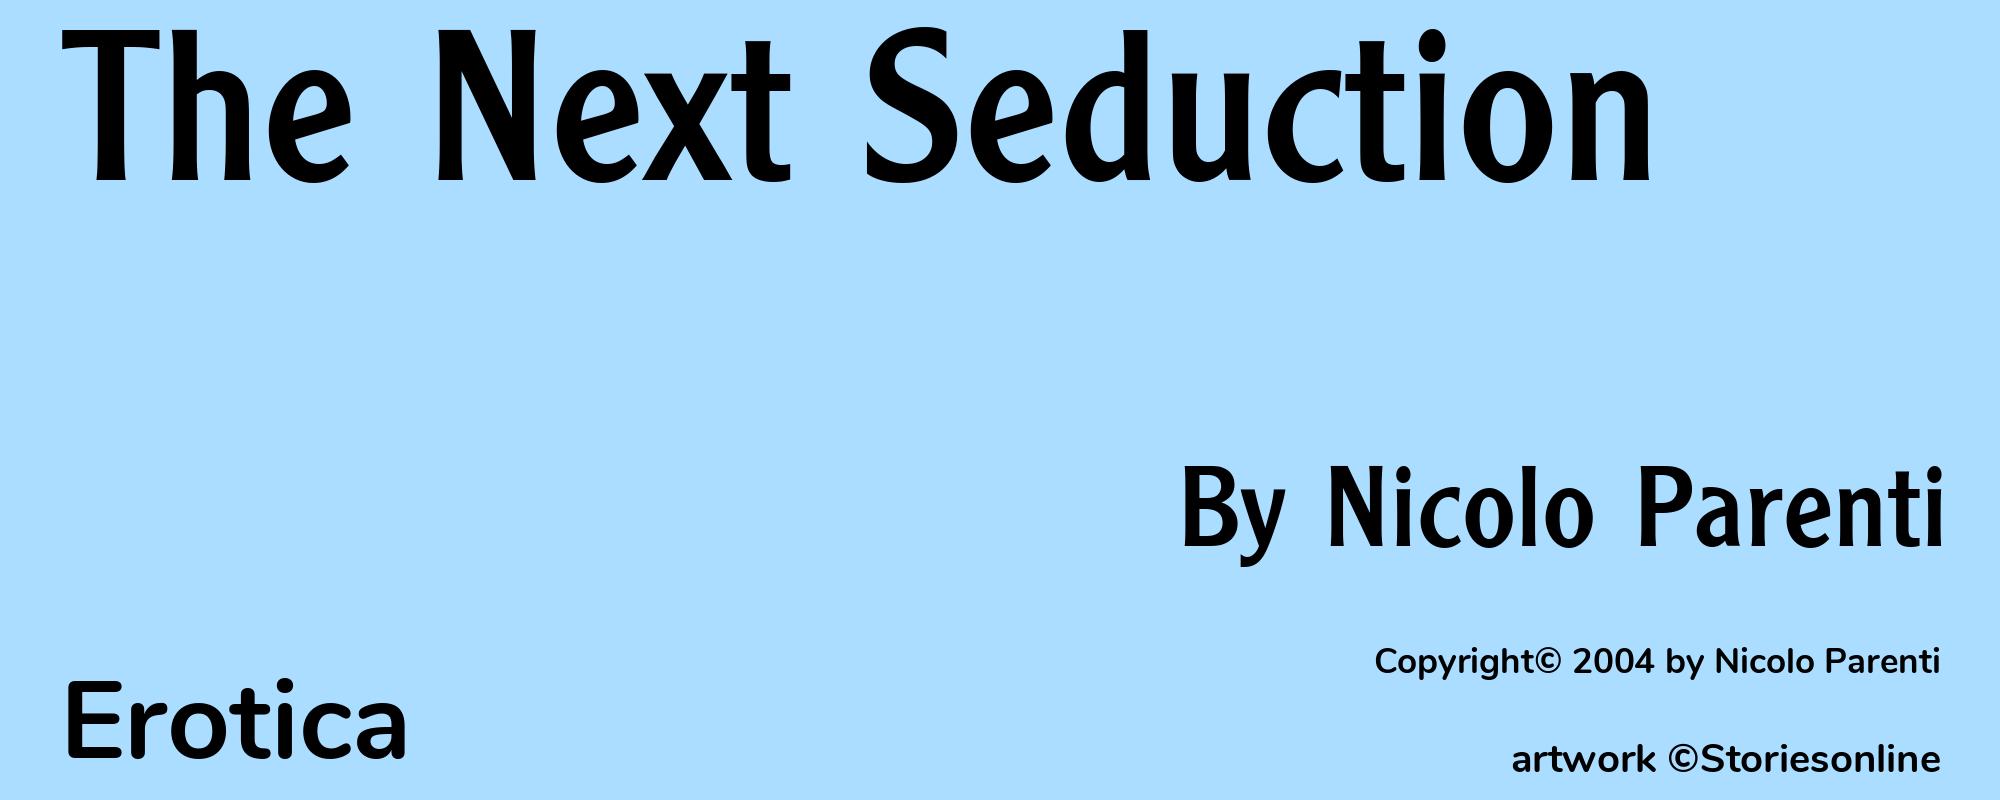 The Next Seduction - Cover